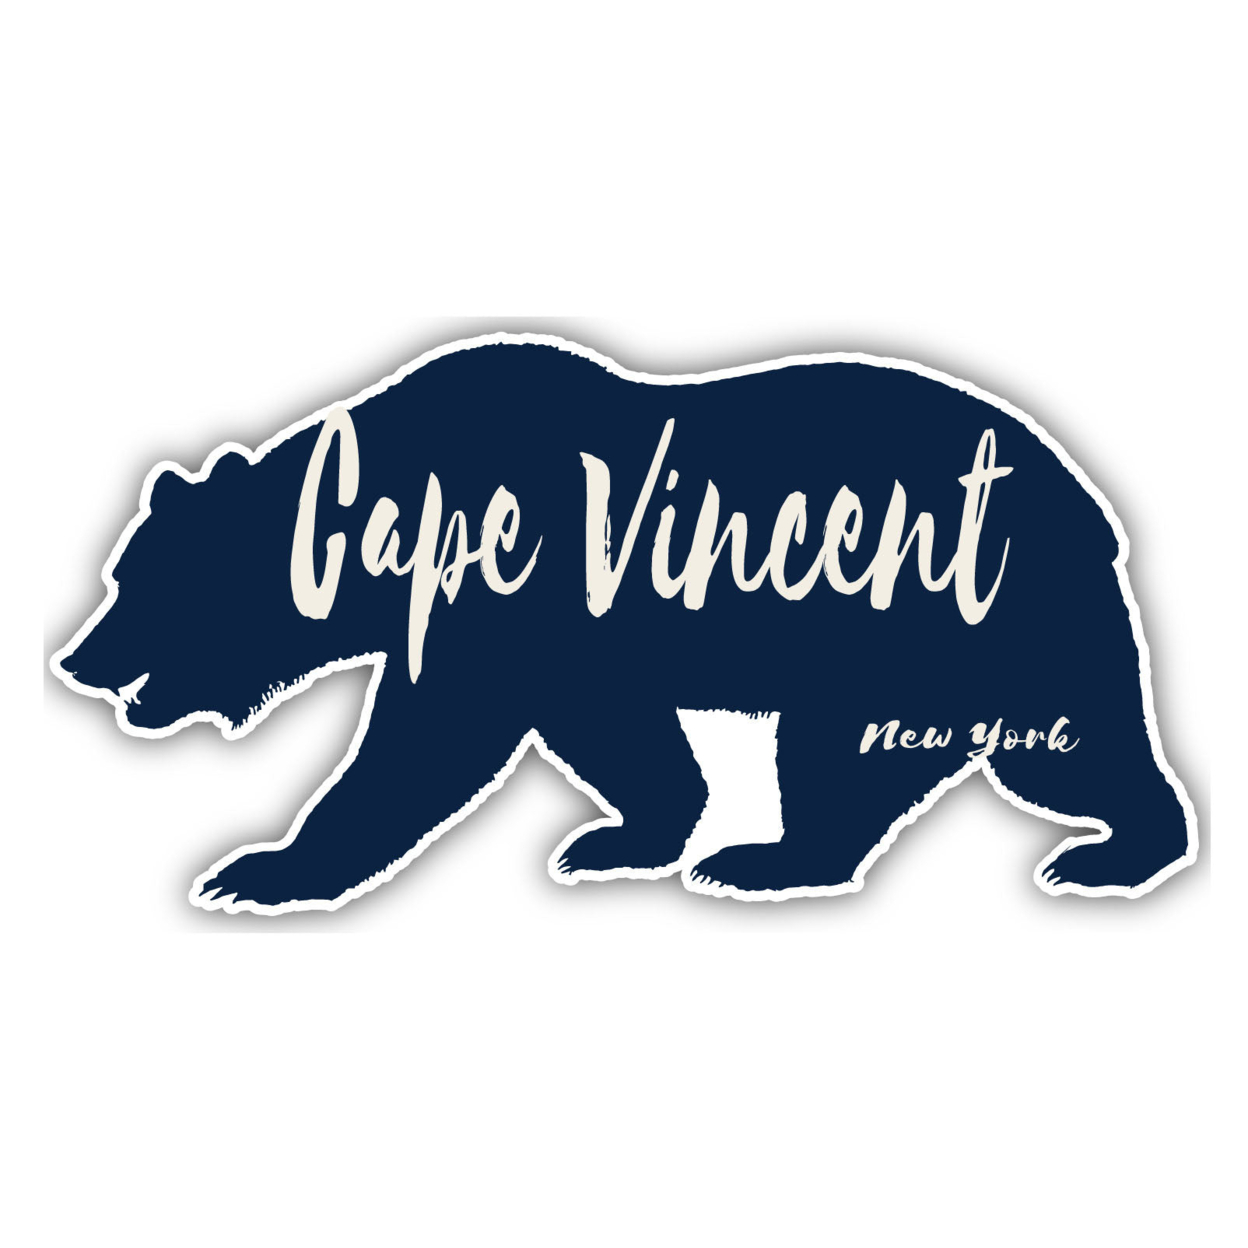 Cape Vincent New York Souvenir Decorative Stickers (Choose Theme And Size) - 4-Pack, 2-Inch, Bear